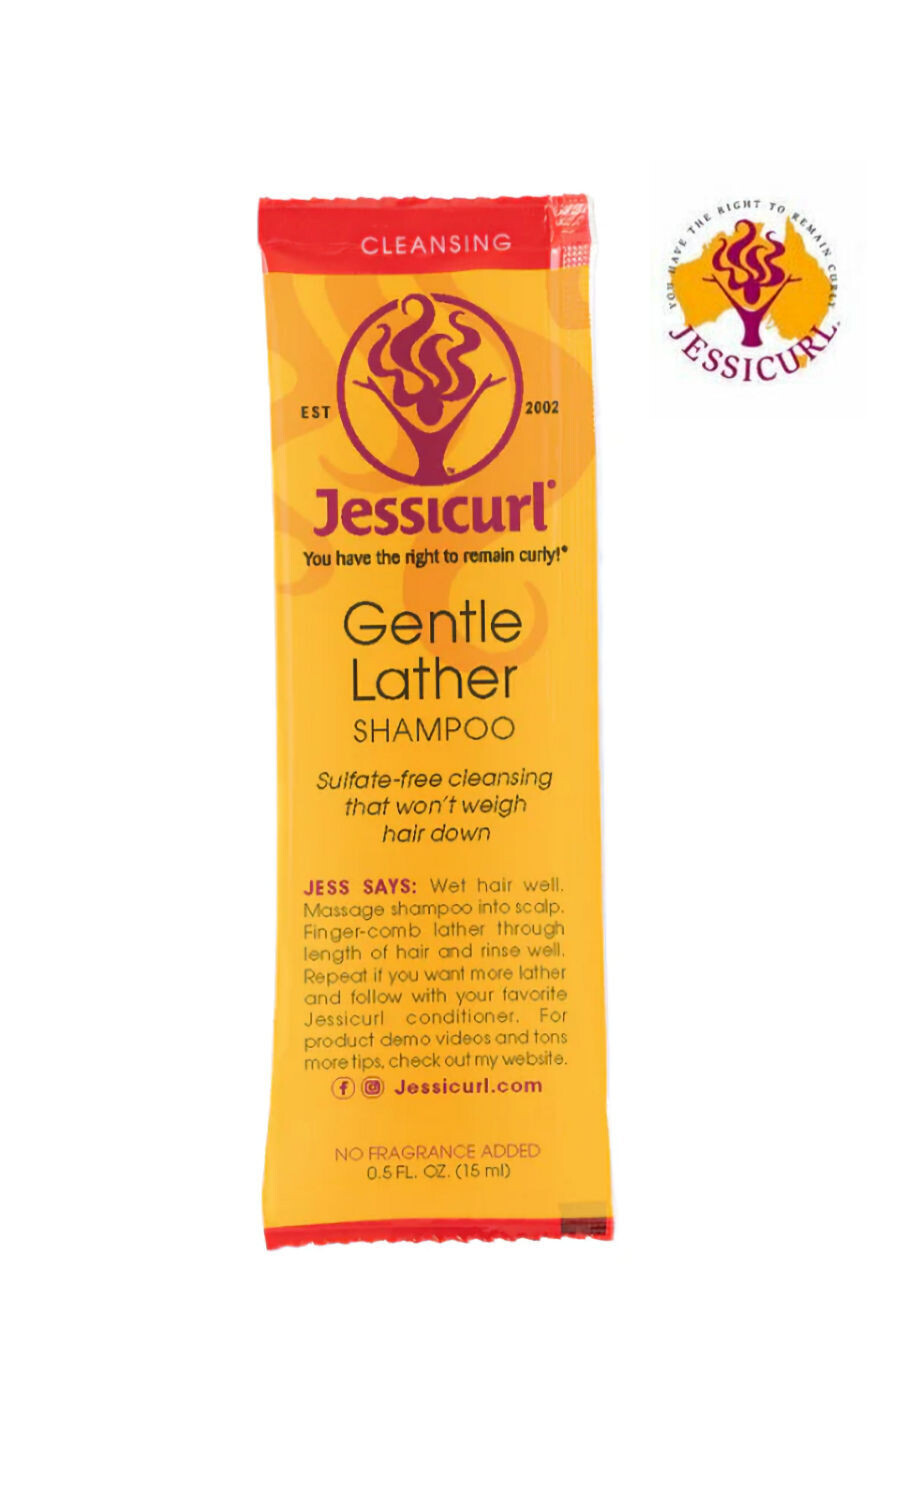 Jessicurl Gentle Lather Shampoo 946ml No Fragrance